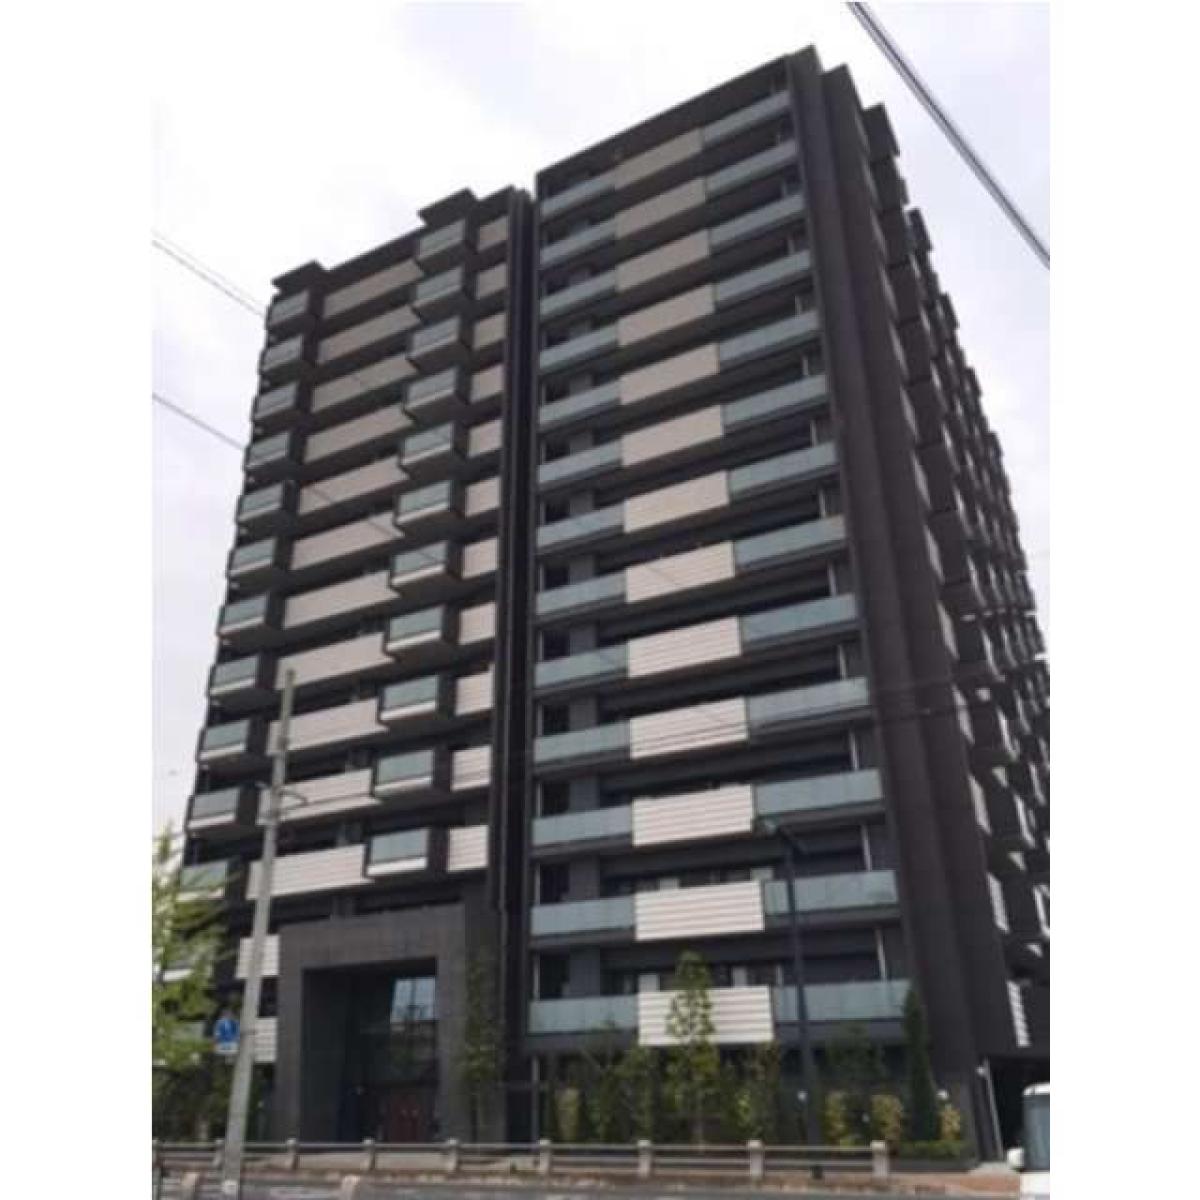 Picture of Apartment For Sale in Yukuhashi Shi, Fukuoka, Japan